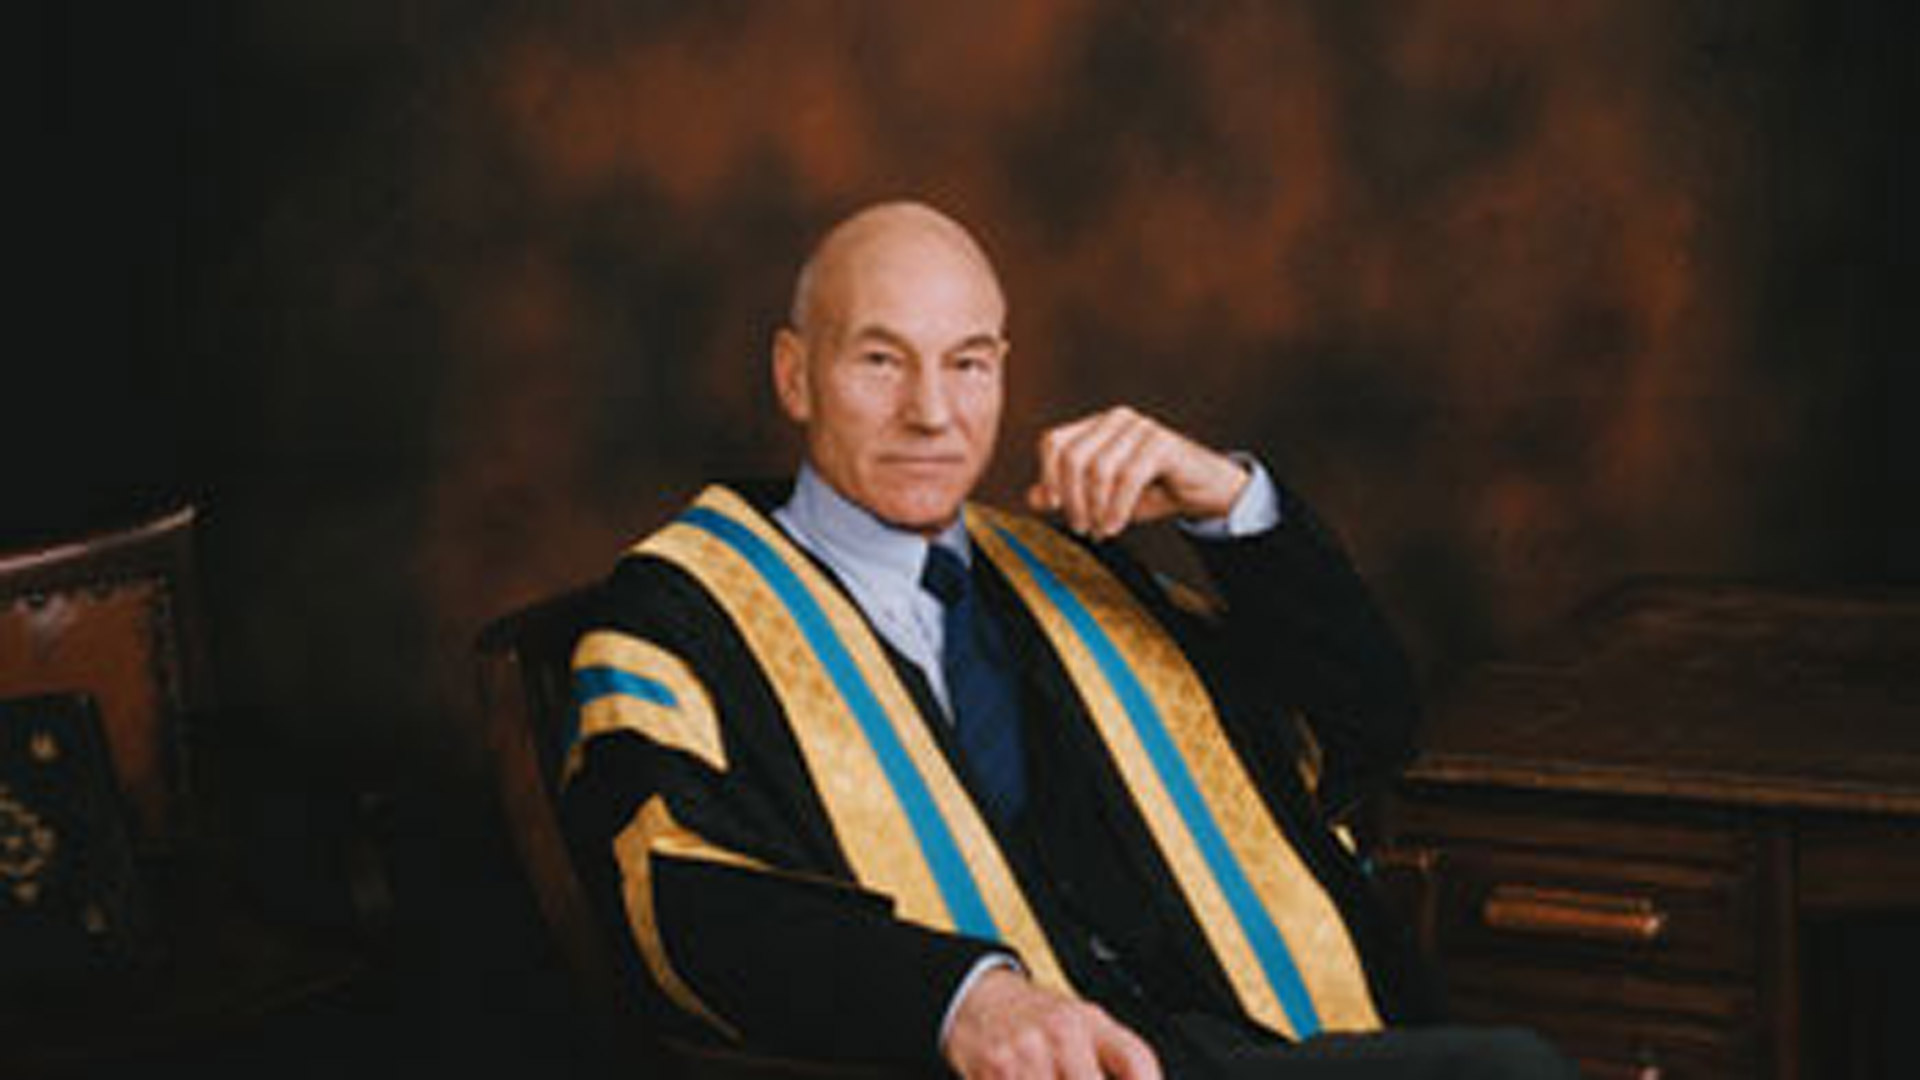 Sir Patrick Stewart chancellor